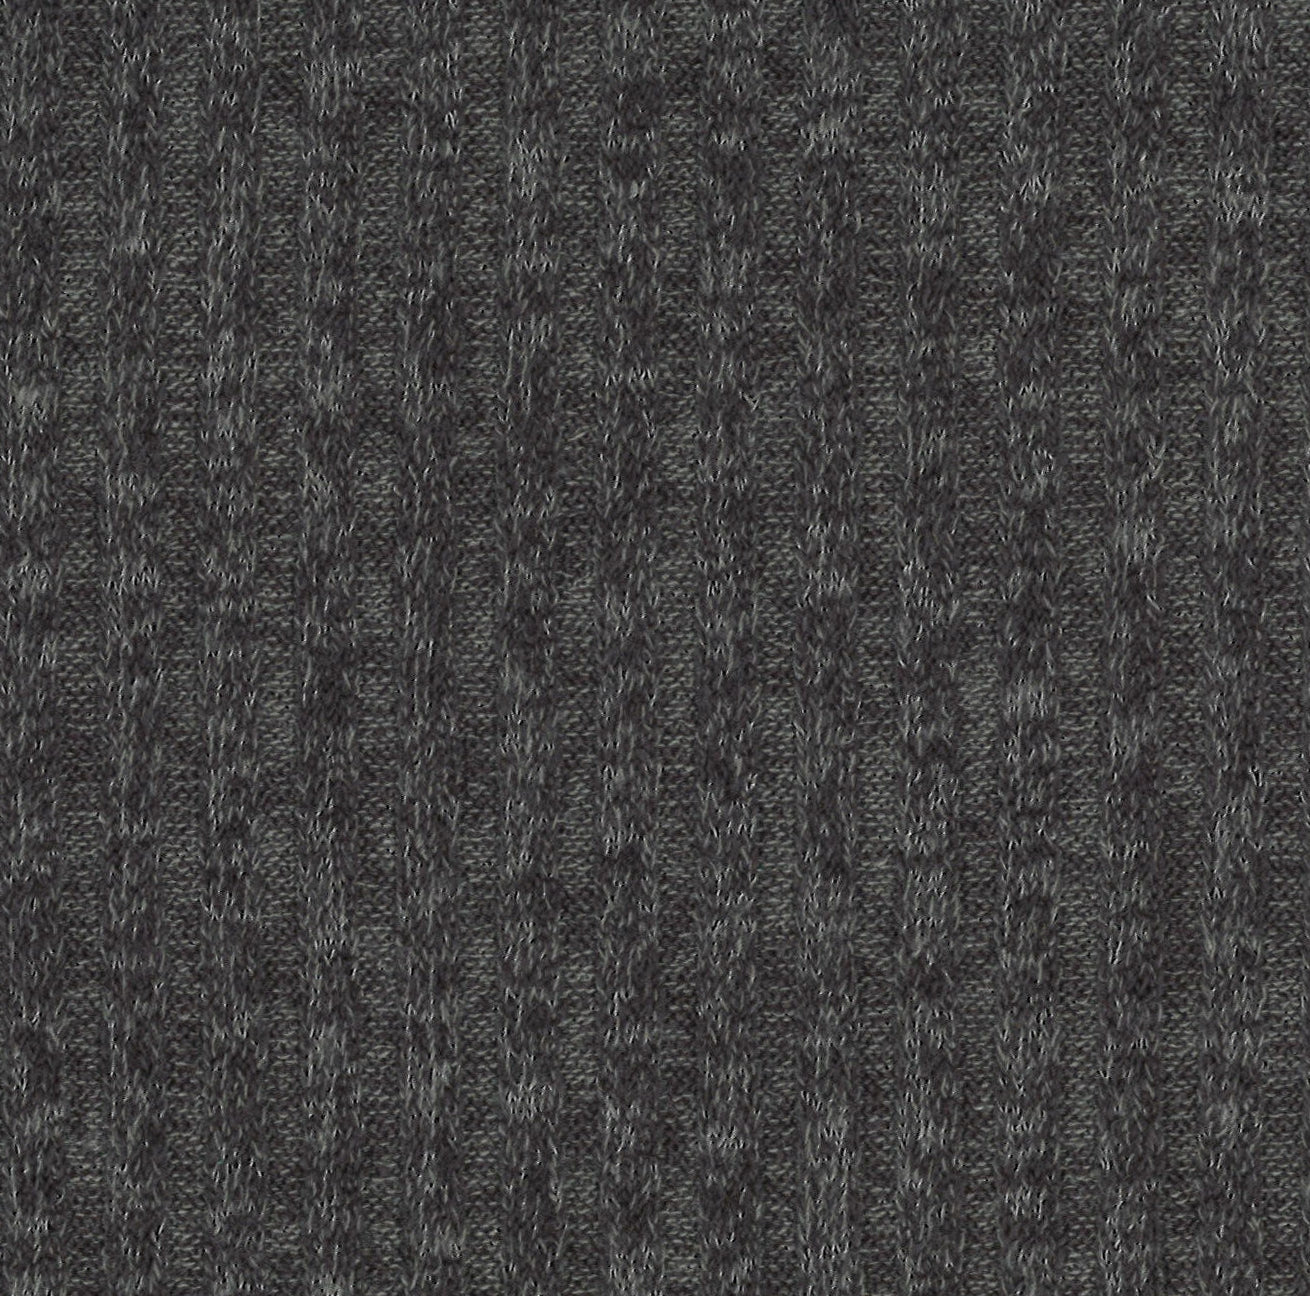 15012-09 Grey Marl Rib Plain Dyed Blend 330g/yd 54" blend grey knit plain dyed polyester rayon rib spandex Solid Color, Rib - knit fabric - woven fabric - fabric company - fabric wholesale - fabric b2b - fabric factory - high quality fabric - hong kong fabric - fabric hk - acetate fabric - cotton fabric - linen fabric - metallic fabric - nylon fabric - polyester fabric - spandex fabric - chun wing hing - cwh hk - fabric worldwide ship - 針織布 - 梳織布 - 布料公司- 布料批發 - 香港布料 - 秦榮興